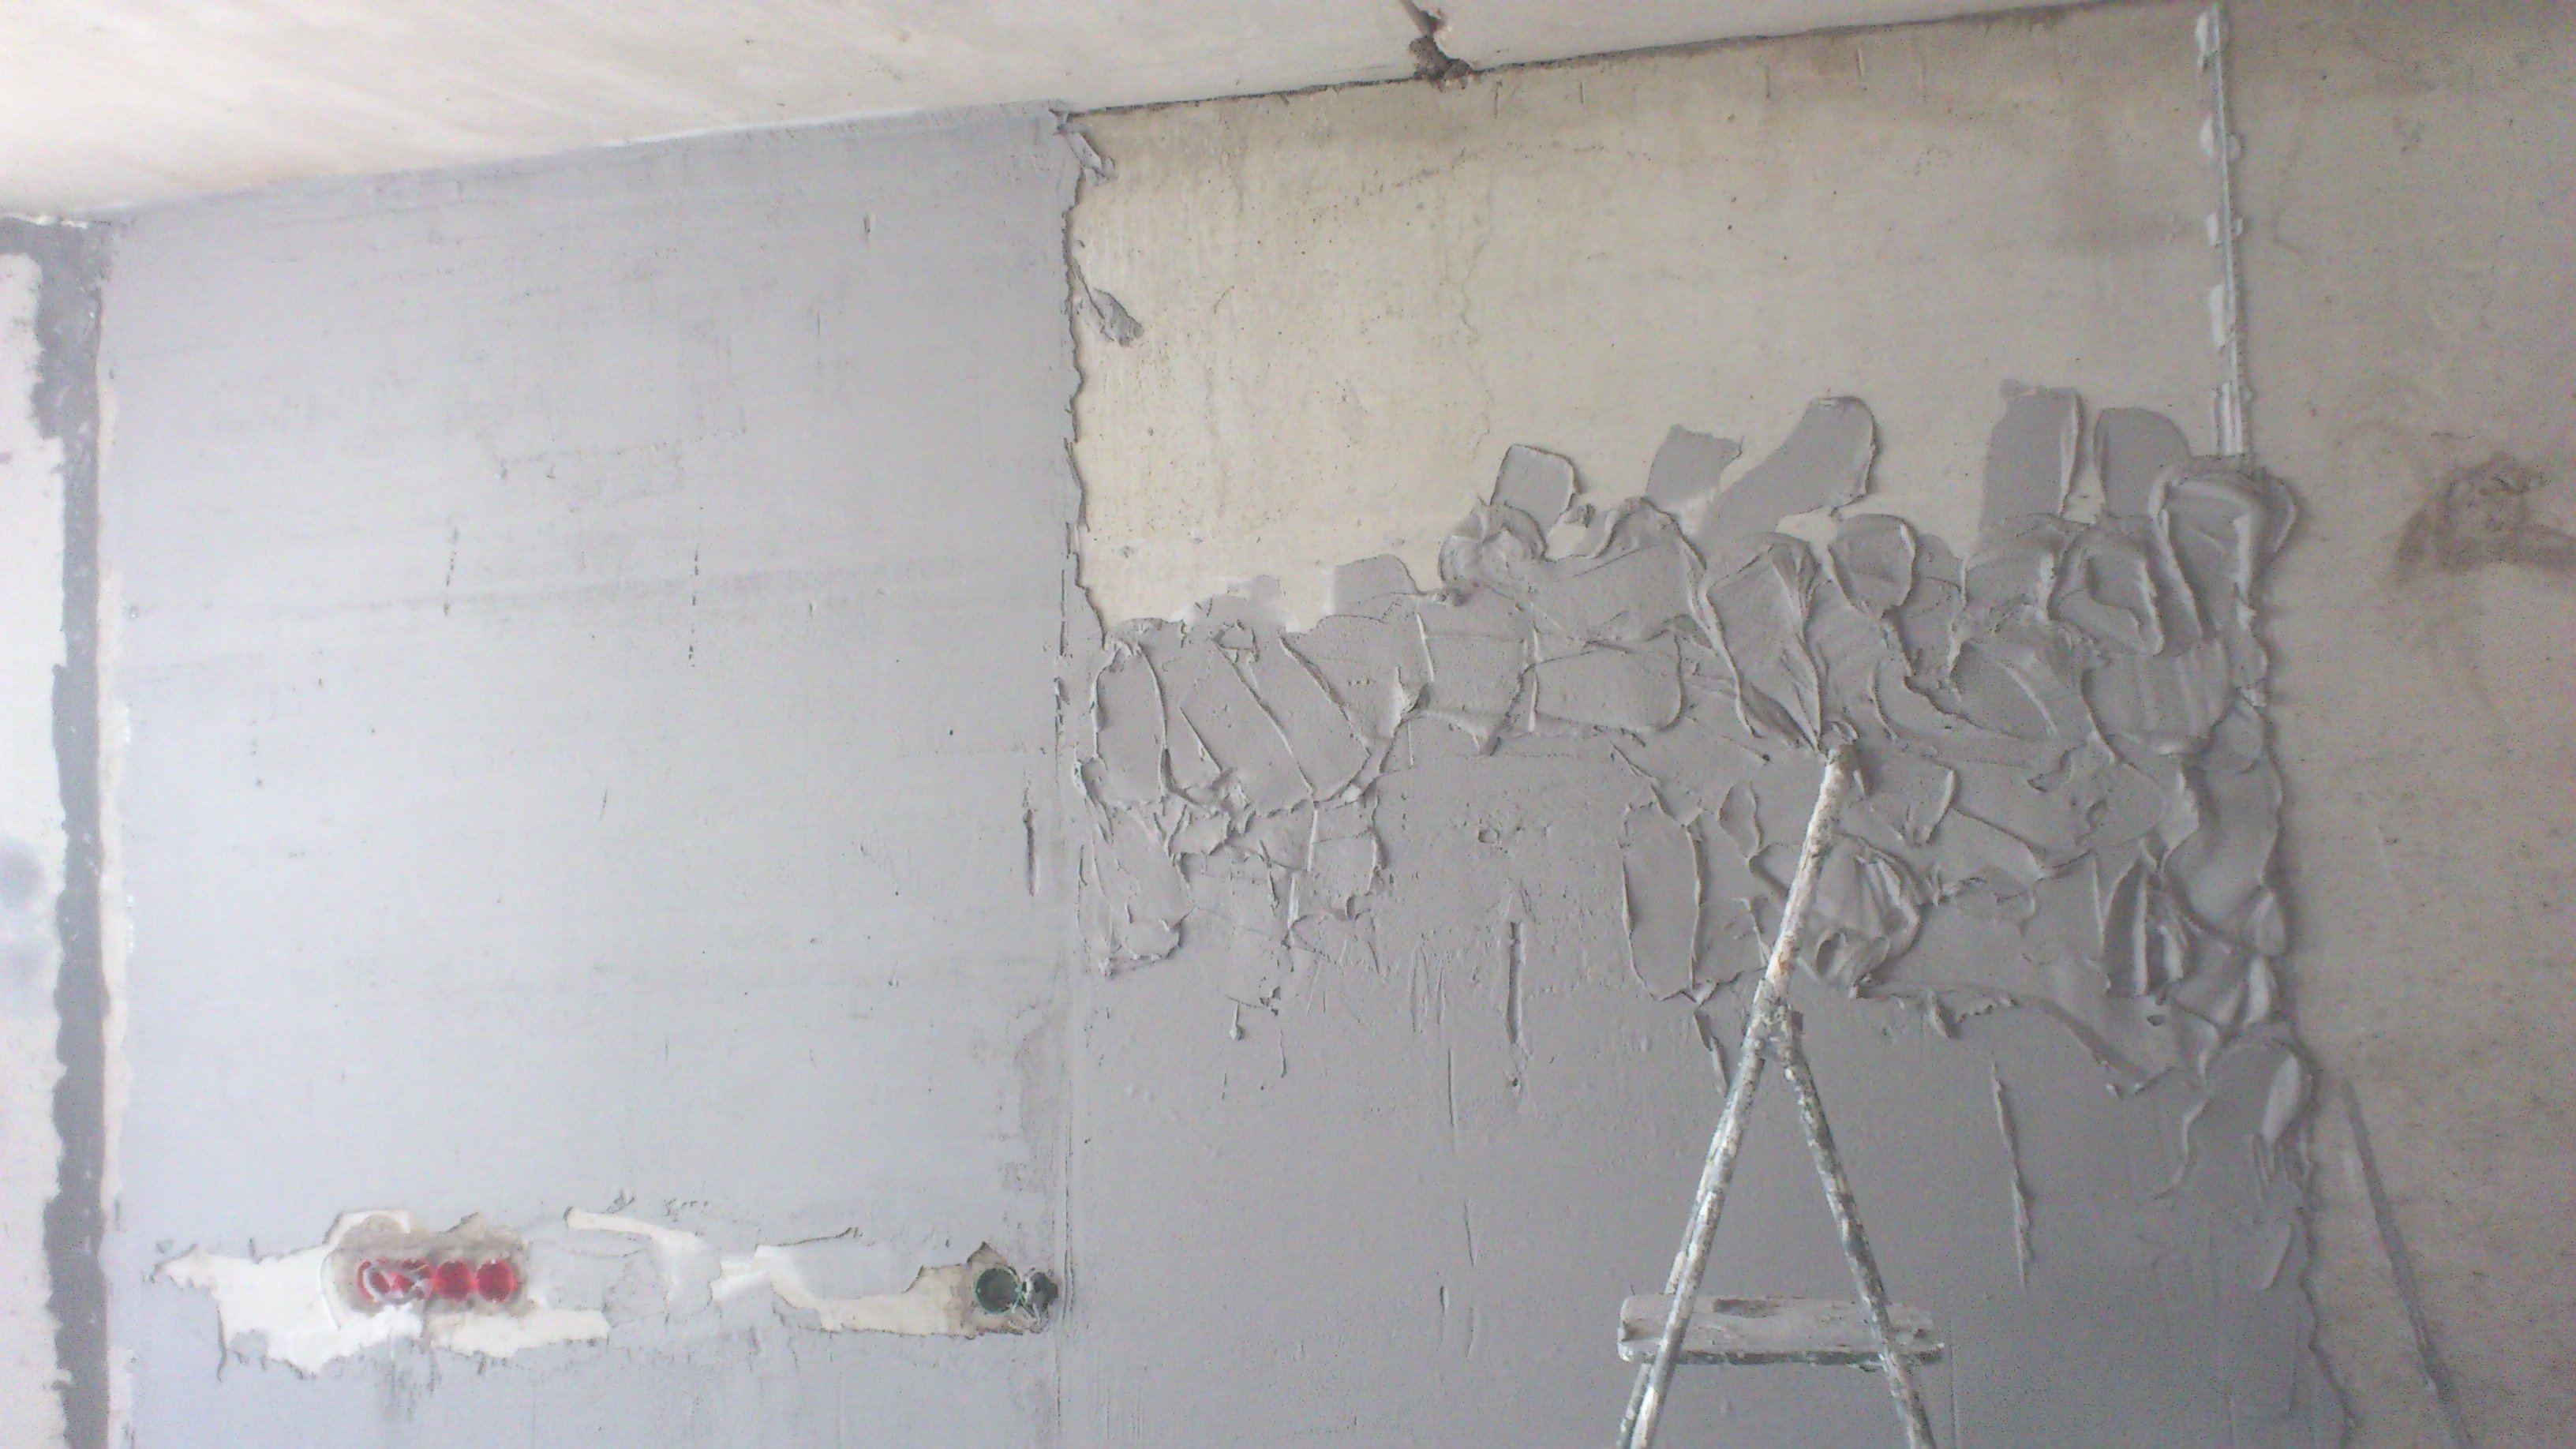 Preparing walls for wallpapering using a primer